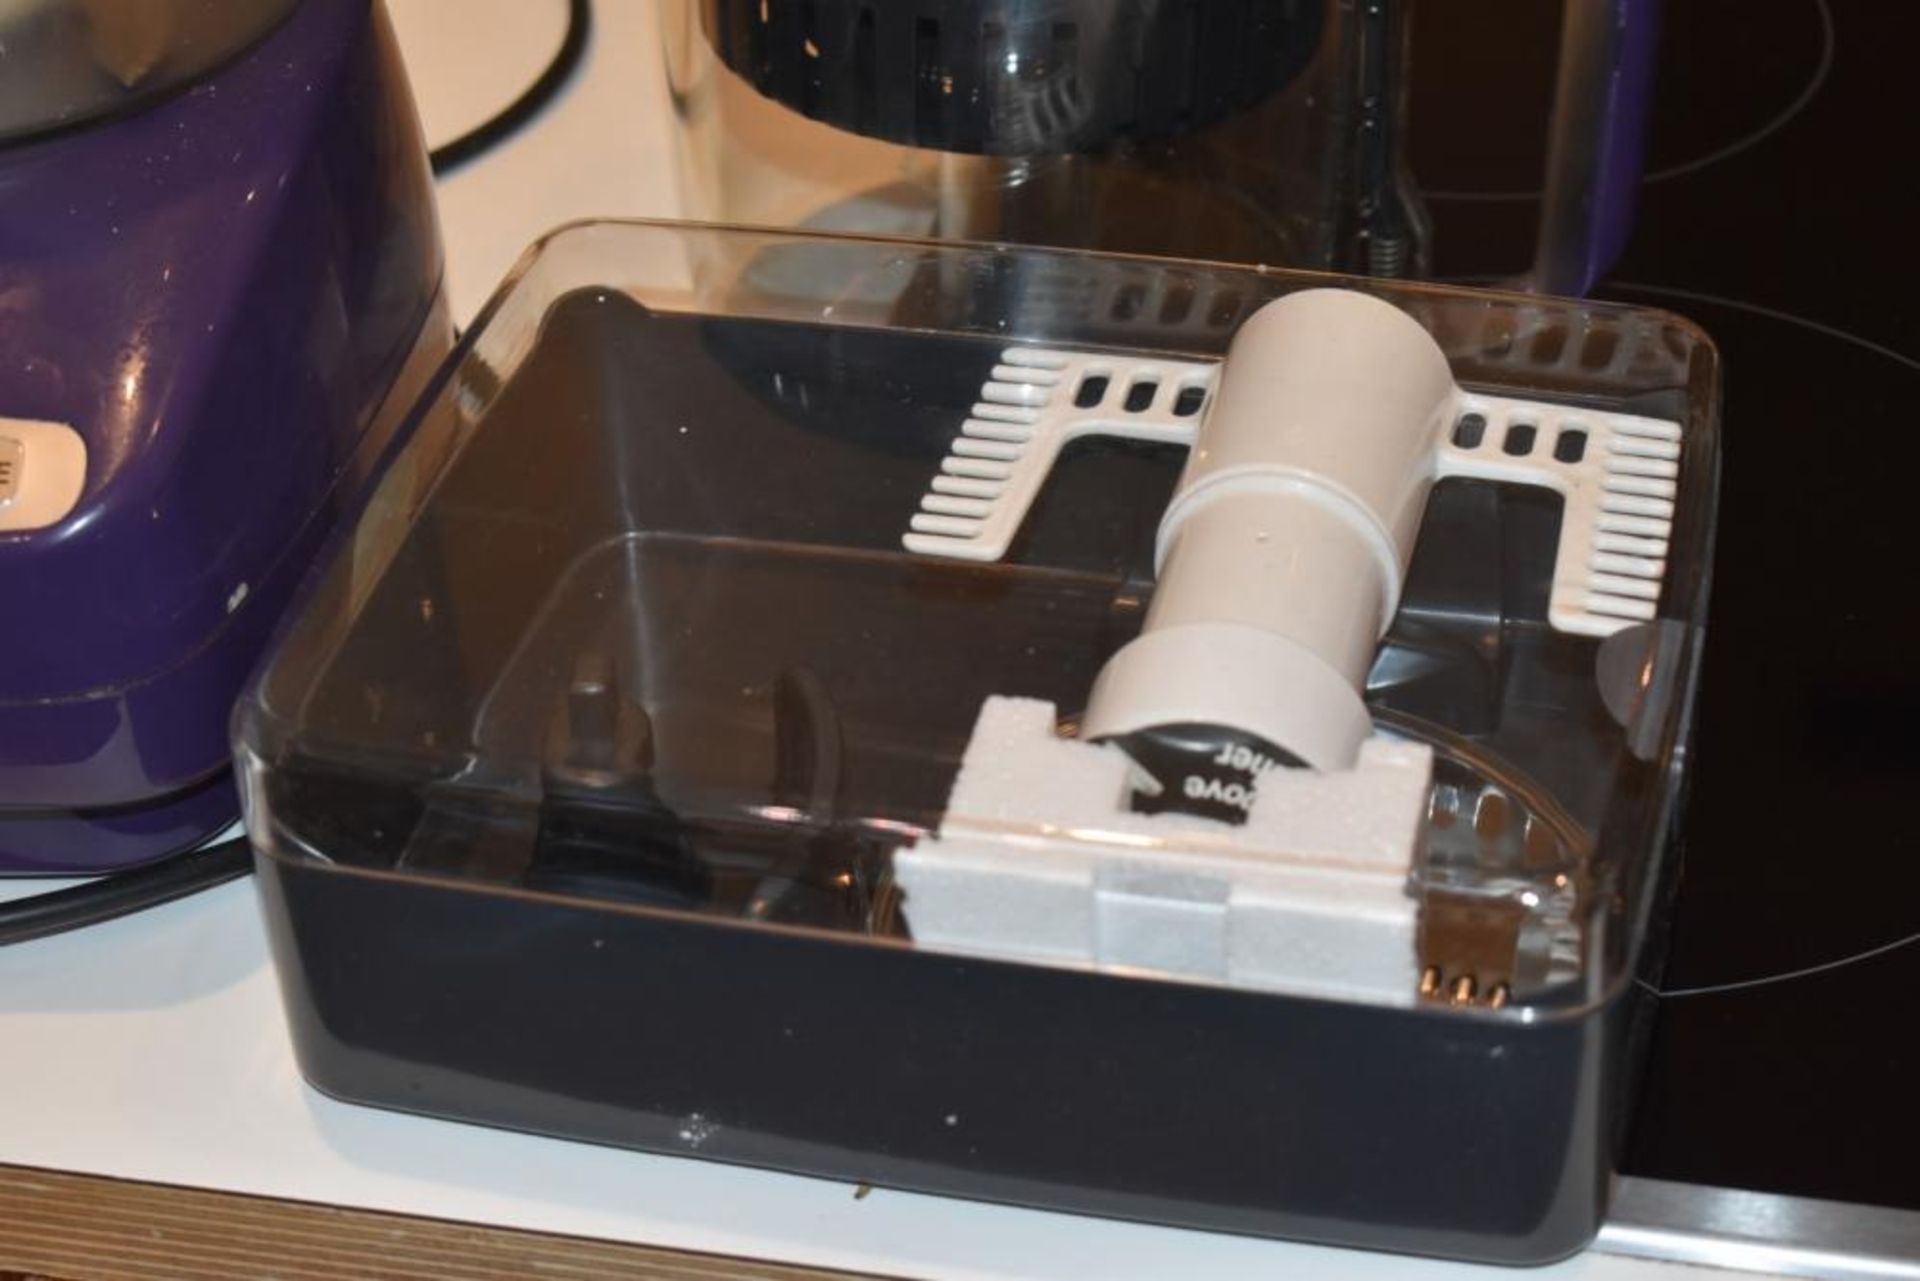 3 x Megamix Mini Plus Food Mixer With Accessories - Model 18240 - CL489 - Location: Putney, - Image 9 of 9